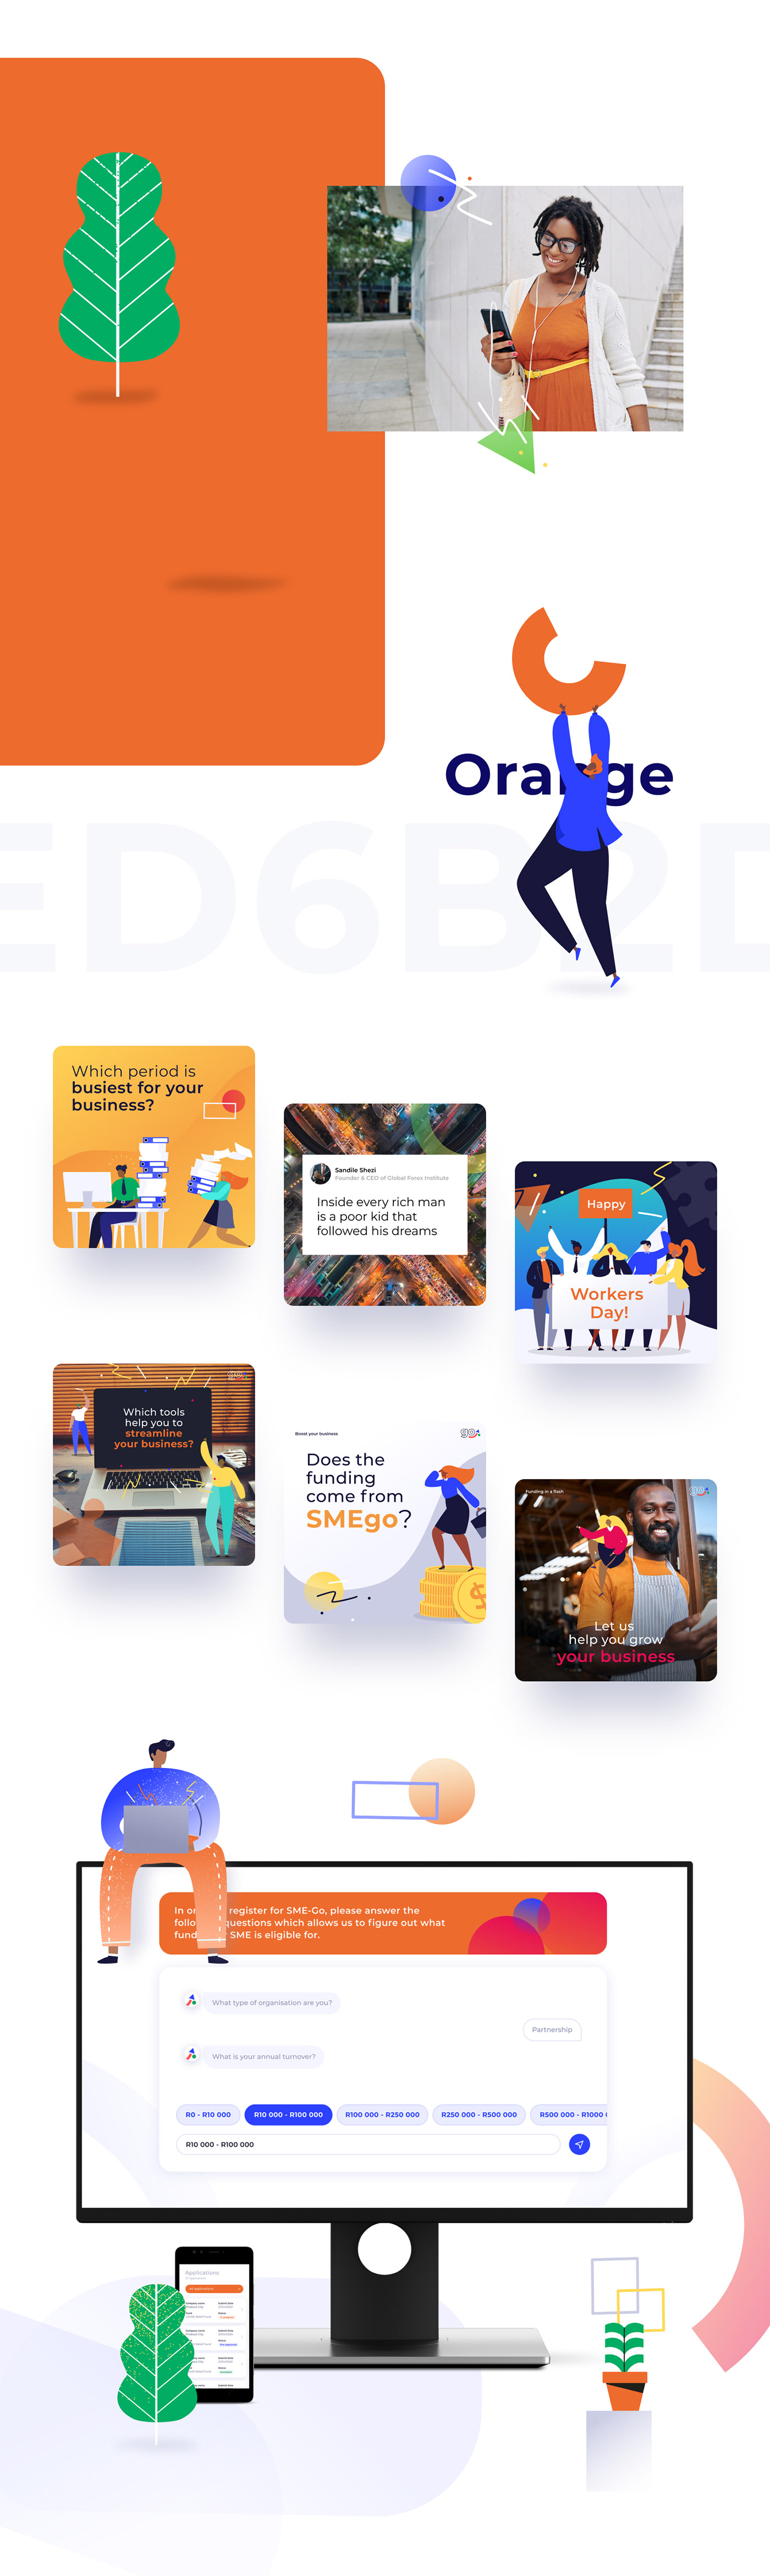 app colorful marketing   Media Design social media social posts funding loan people illustration Small Business